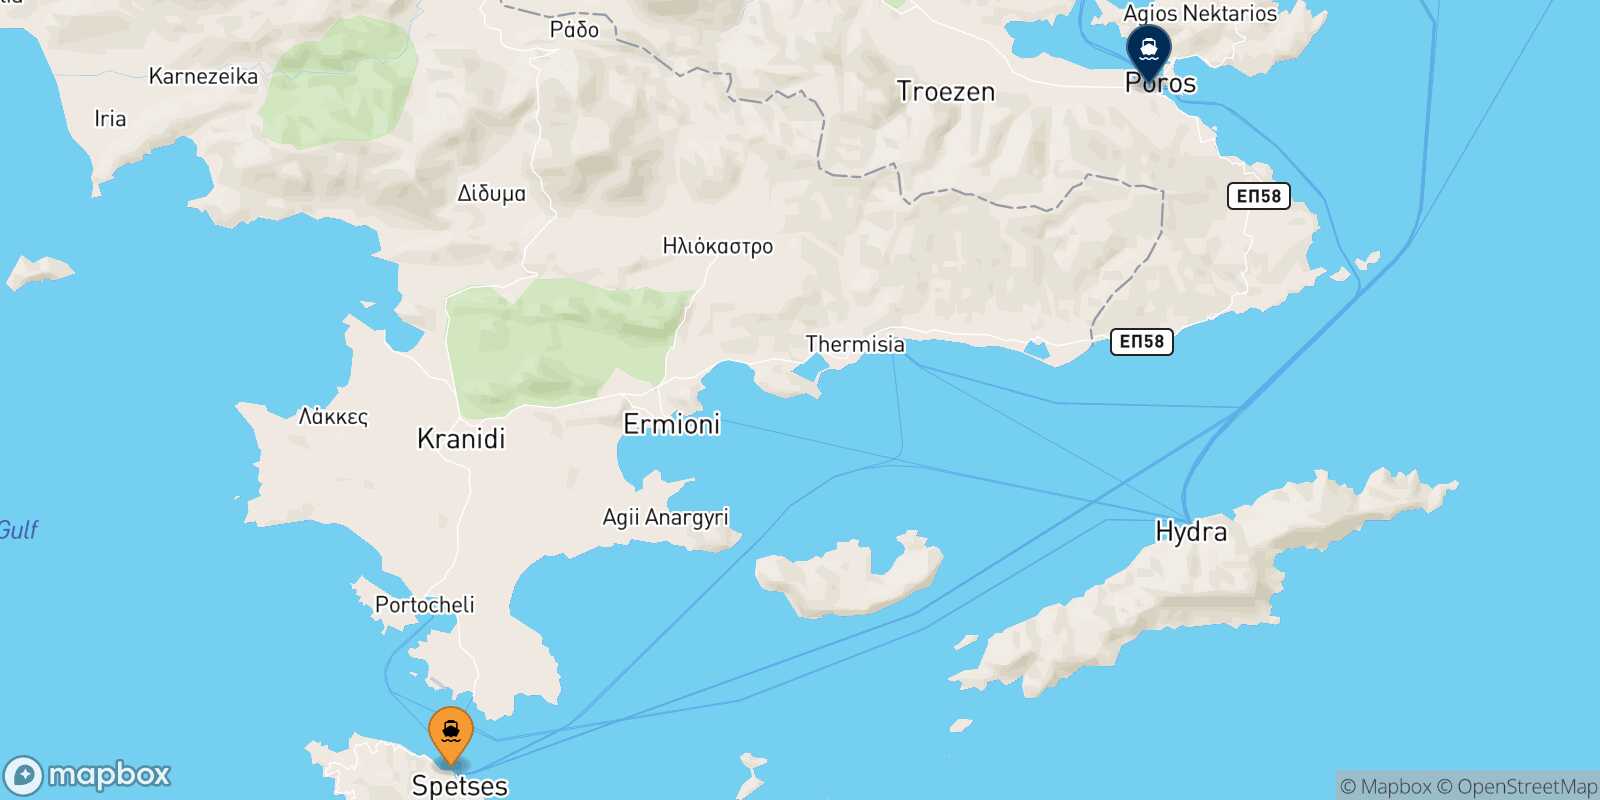 Mapa de la ruta Spetses Hydra